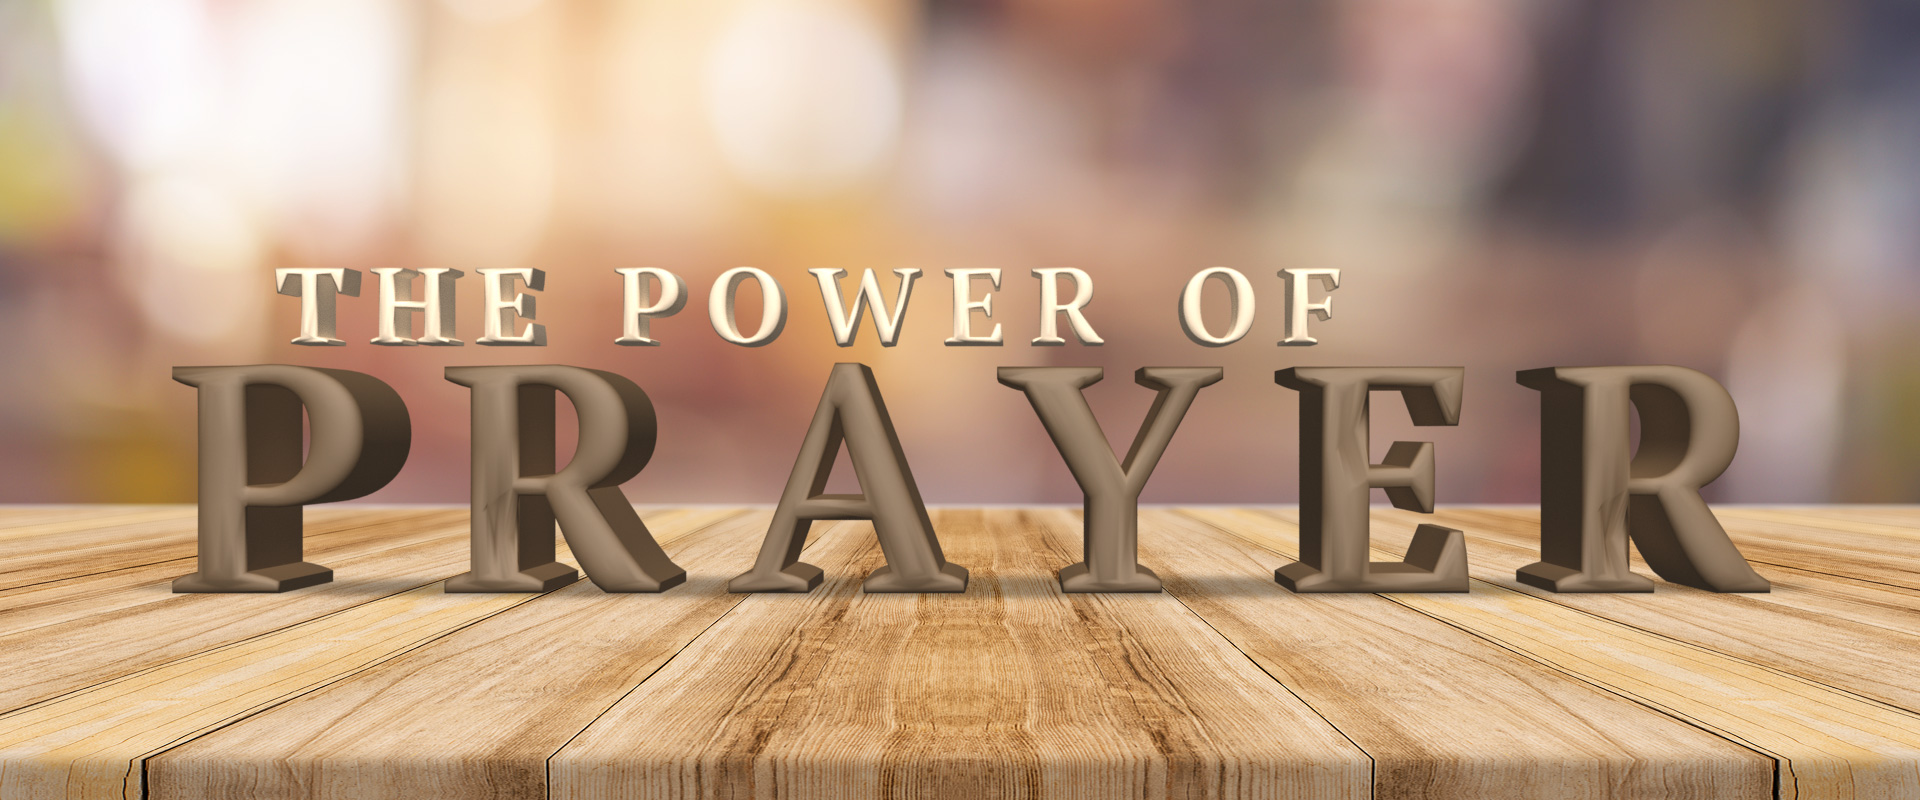 The Power Of Prayer
